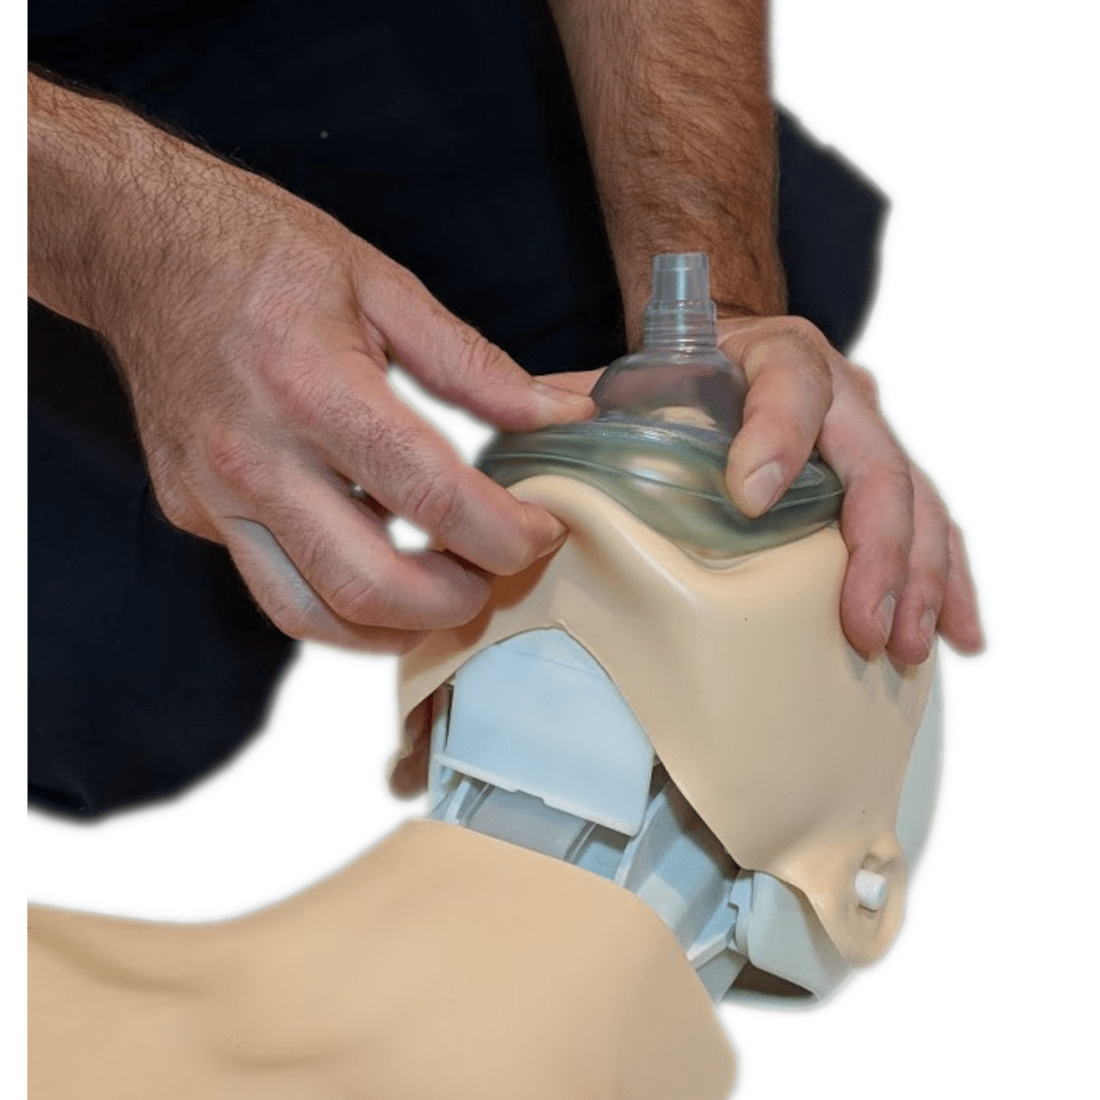 Dispositif de protection servant a la reanimation cardiorespiratoire